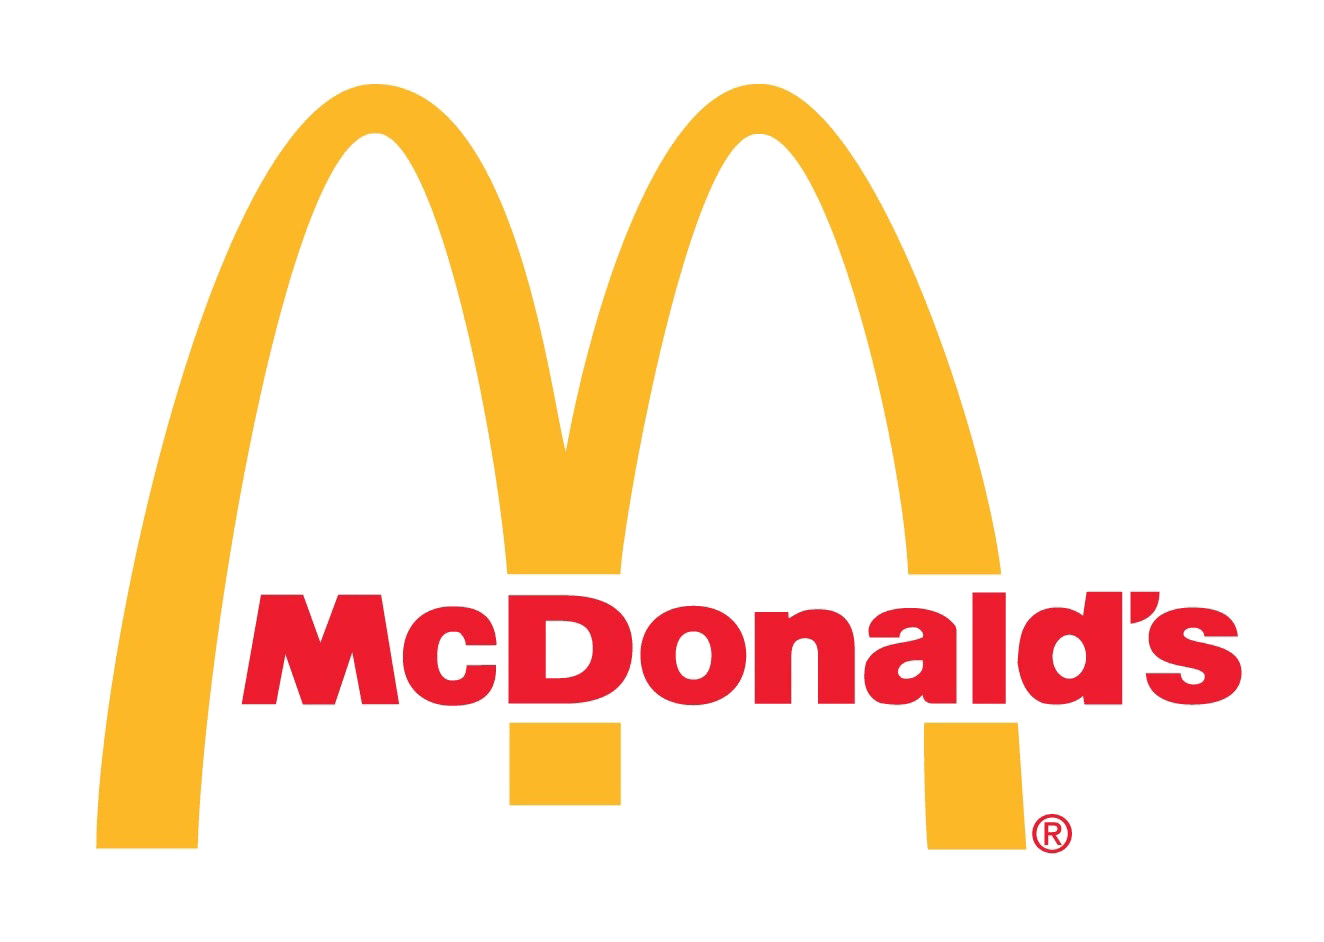 McDonald's Word Logo - McDonald's logo PNG image free download